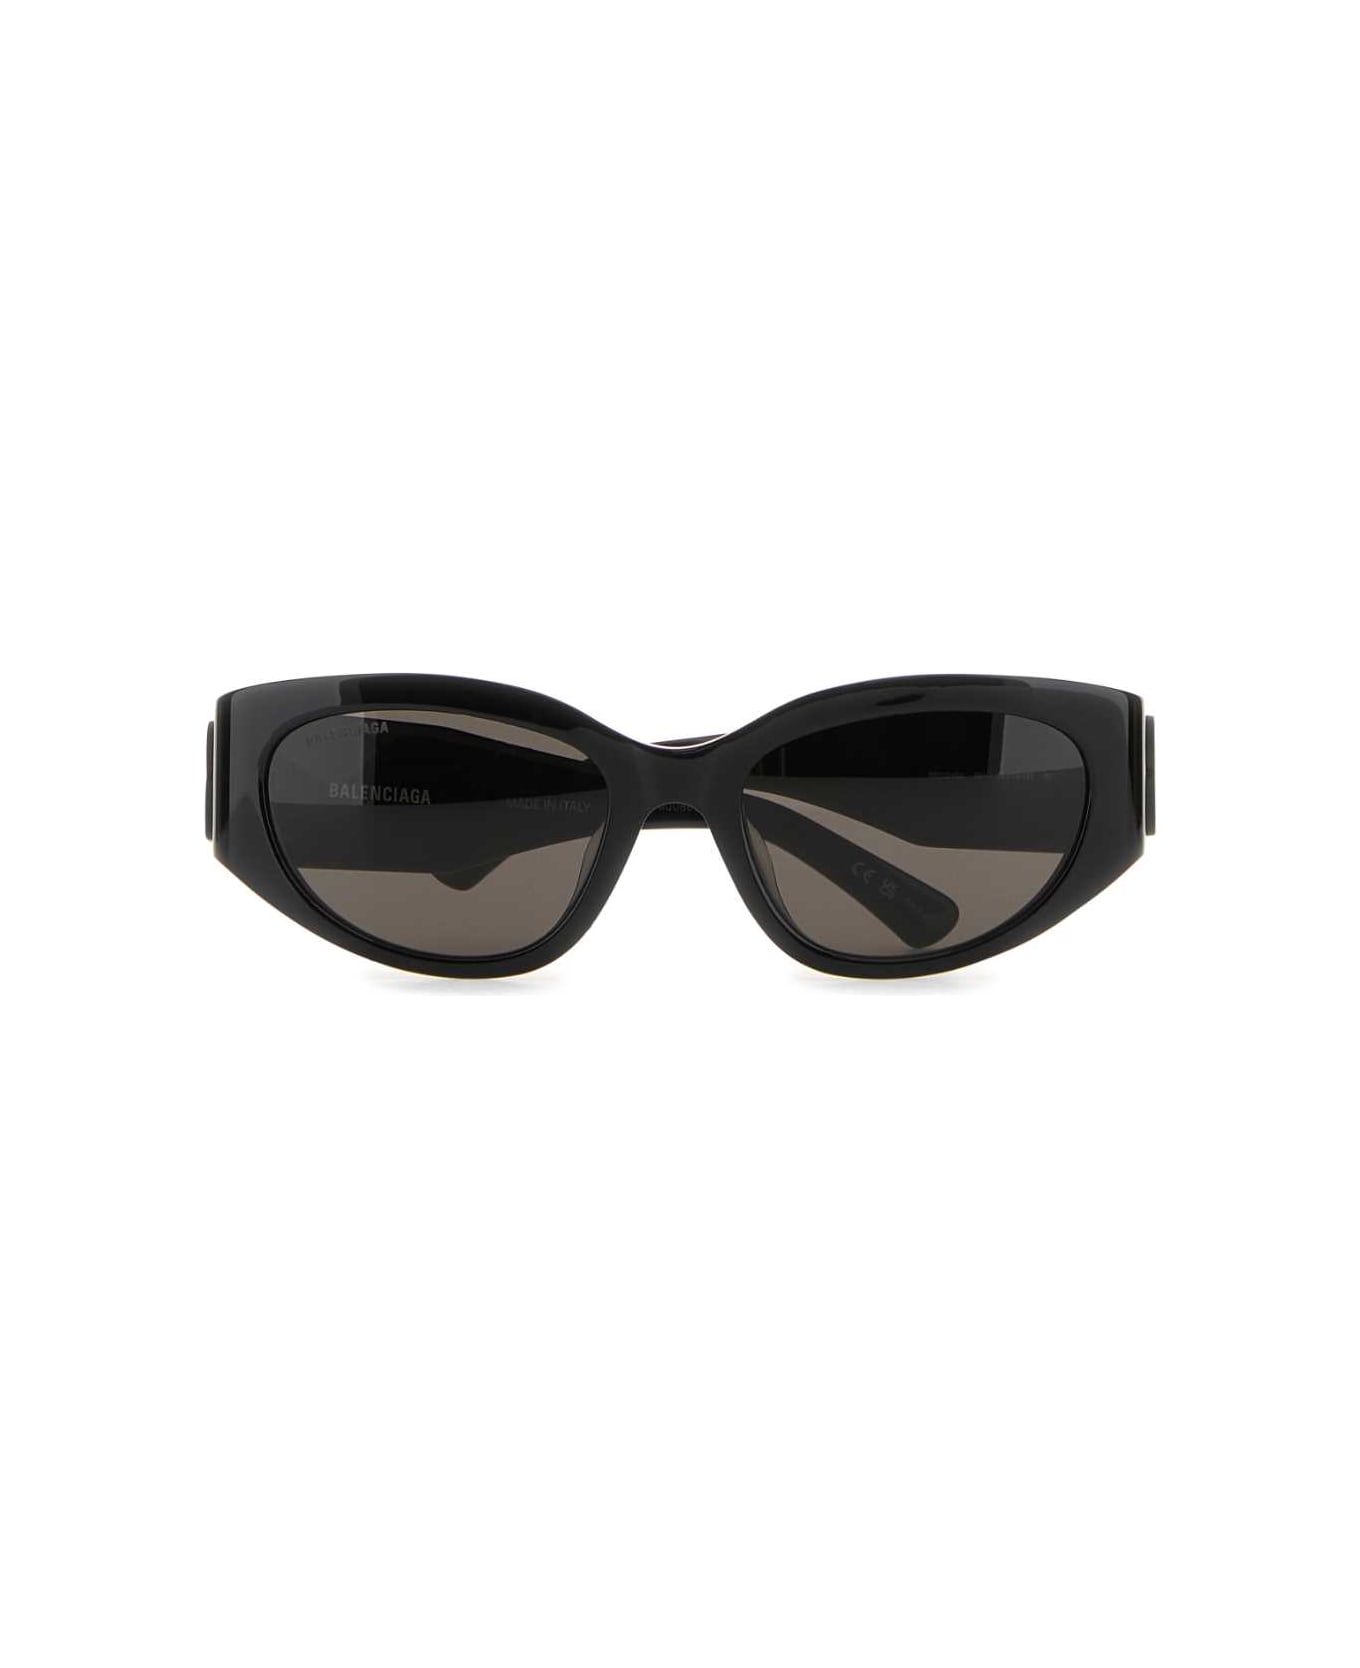 Balenciaga Black Acetate Sunglasses - BLACKBLACKLOGO